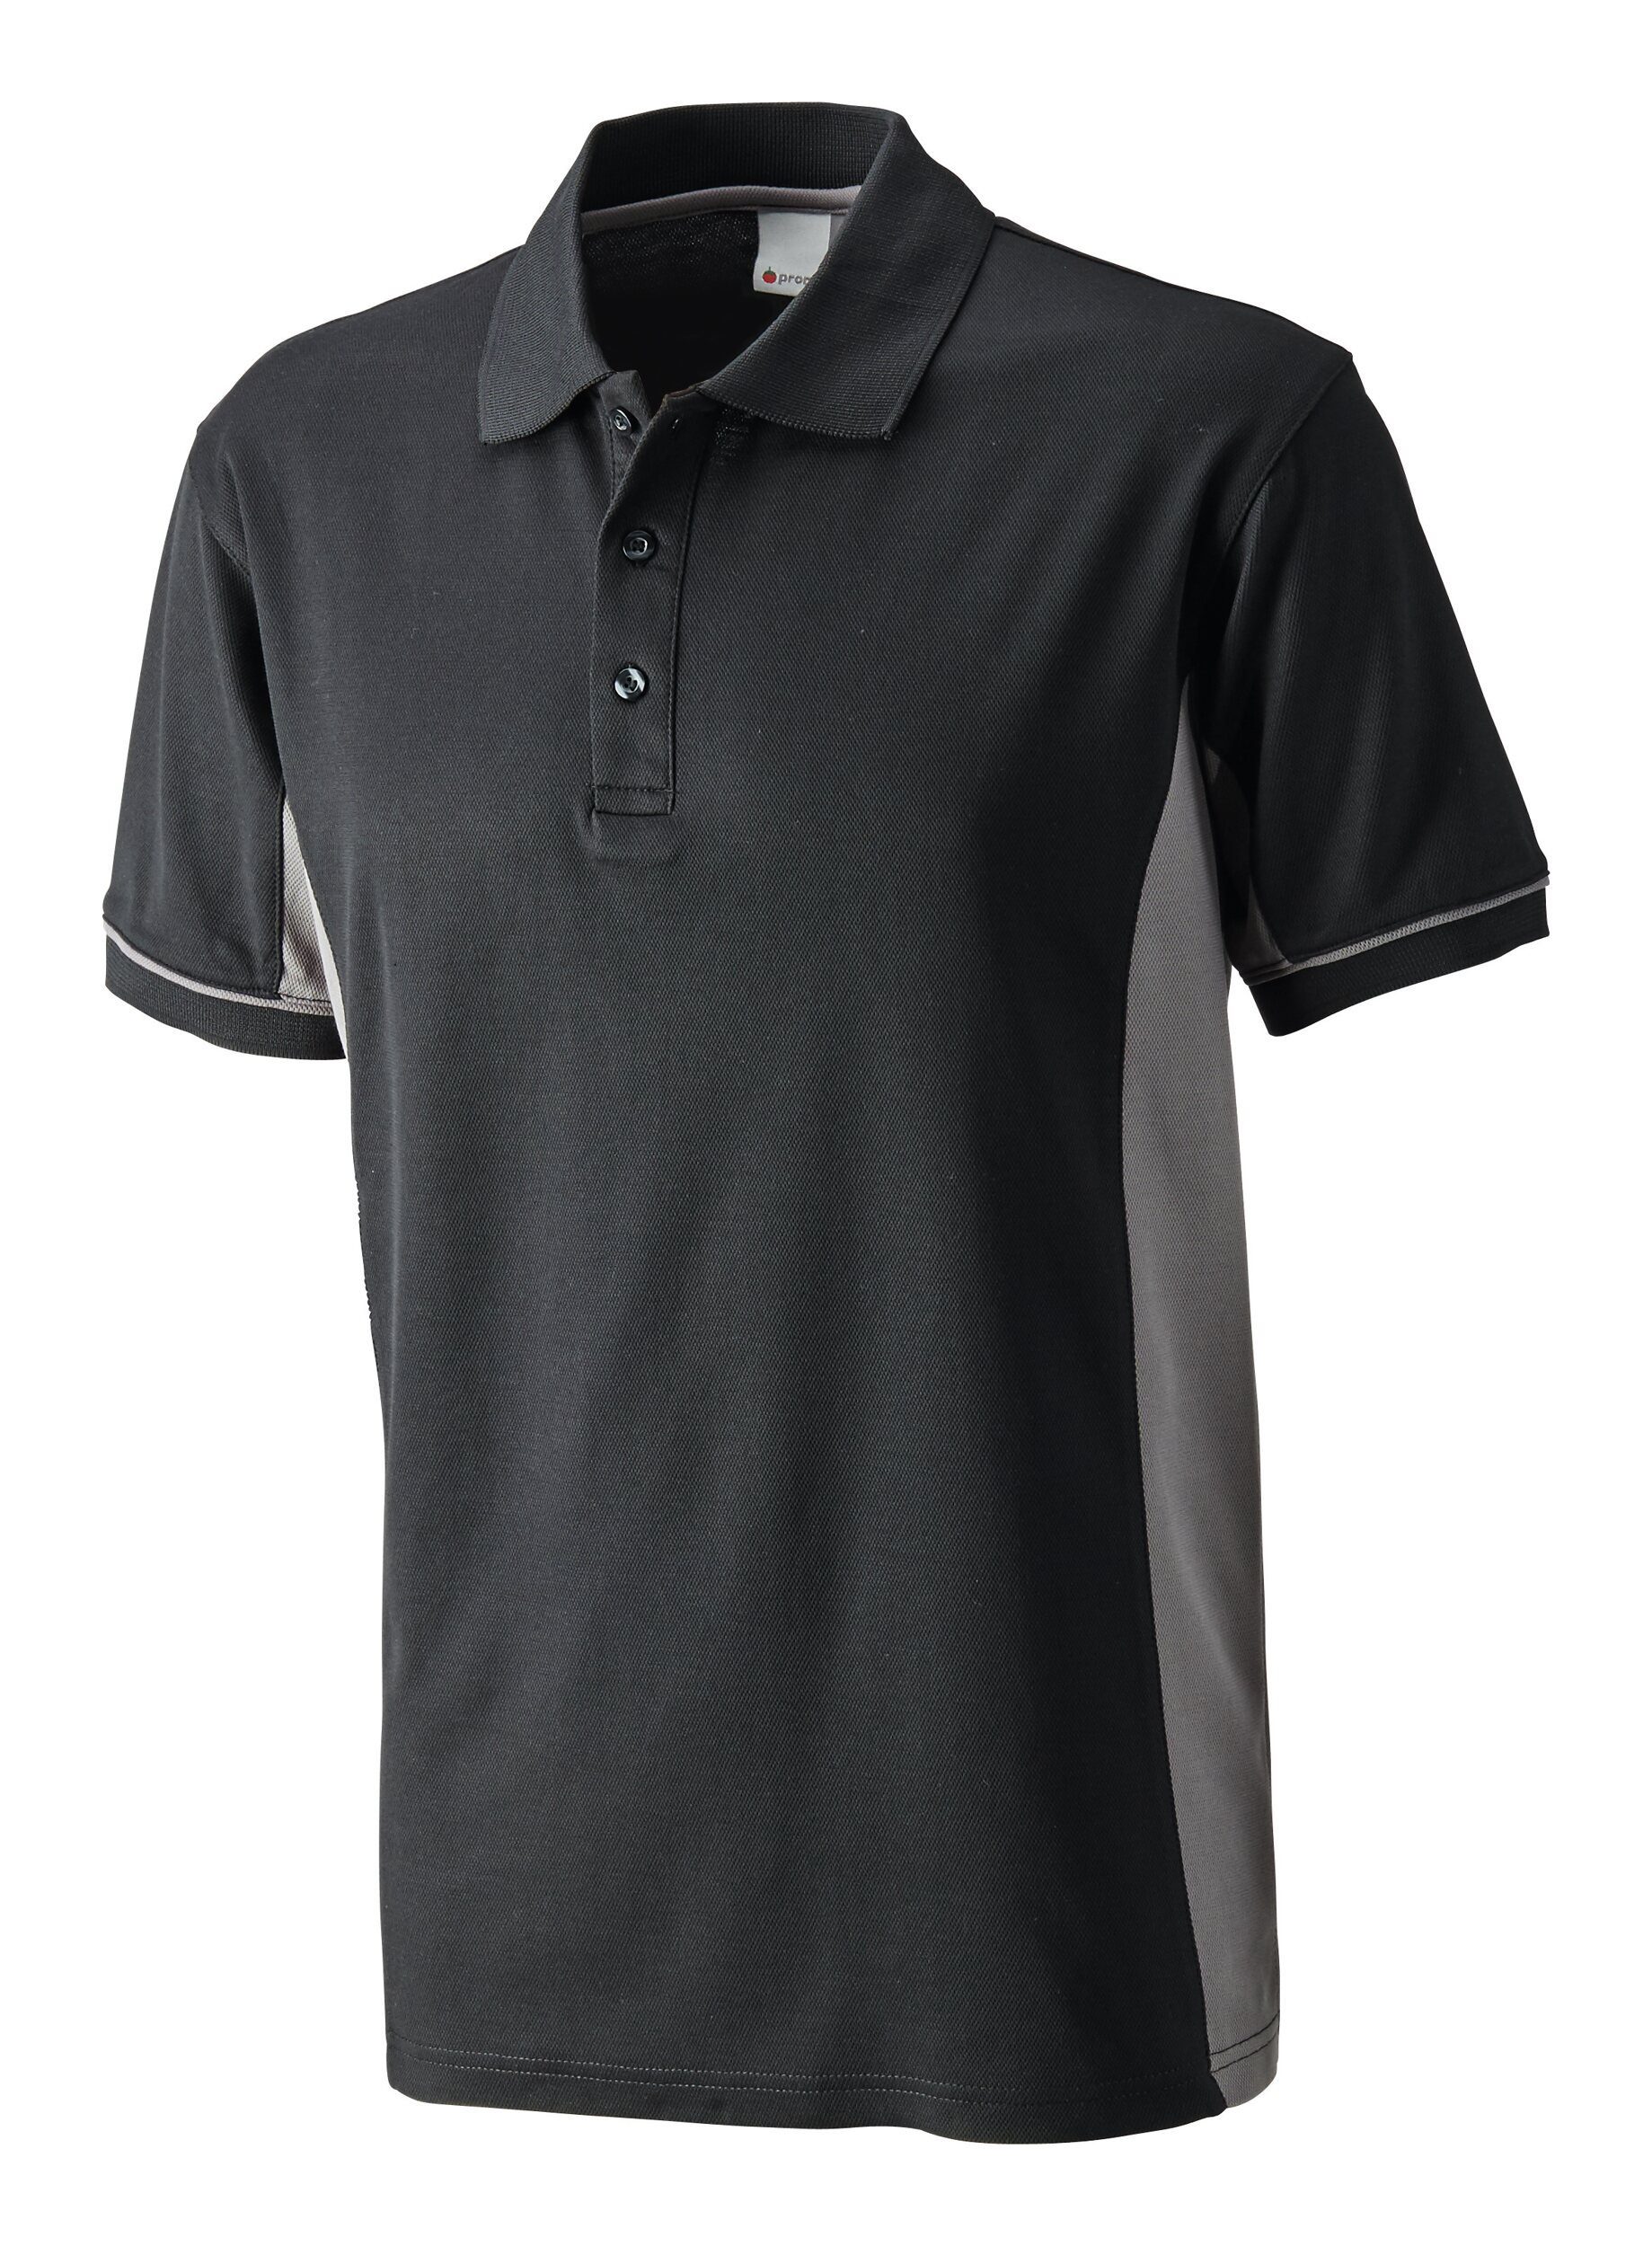 Promodoro Funktionsshirt Poloshirt Function Contrast schwarz/grau Größe M